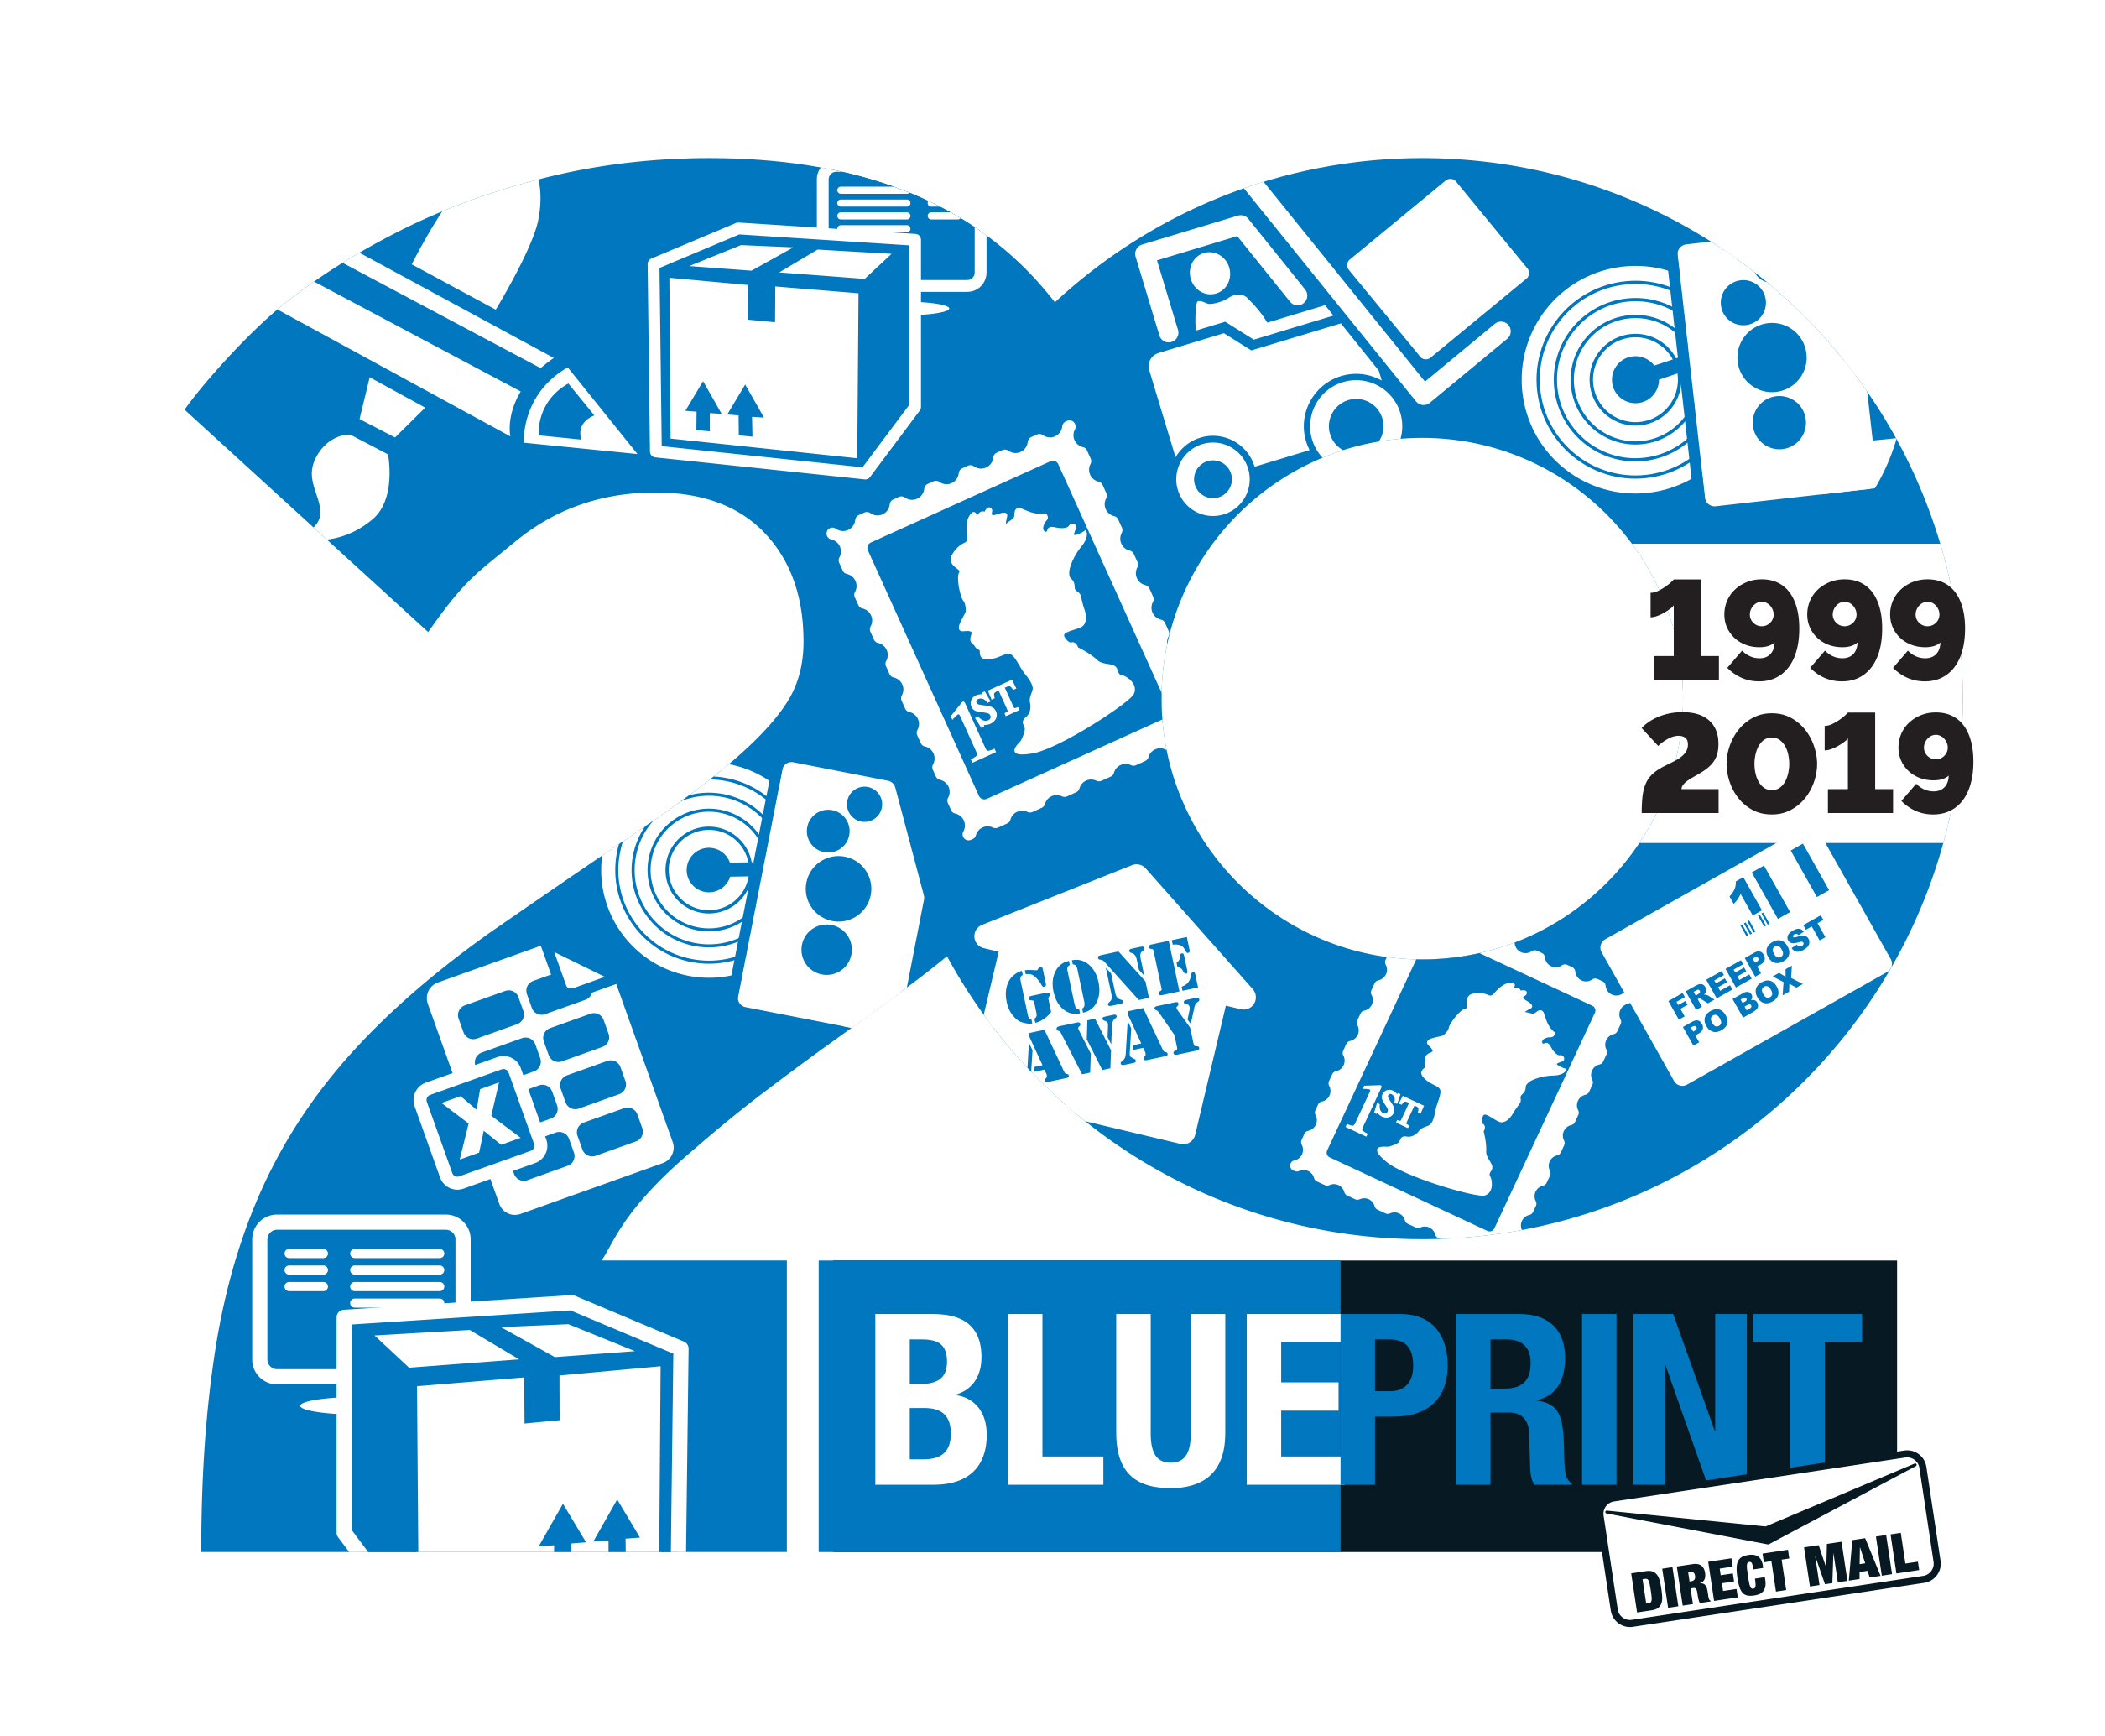 Blue Print Direct Mail expands into larger premises